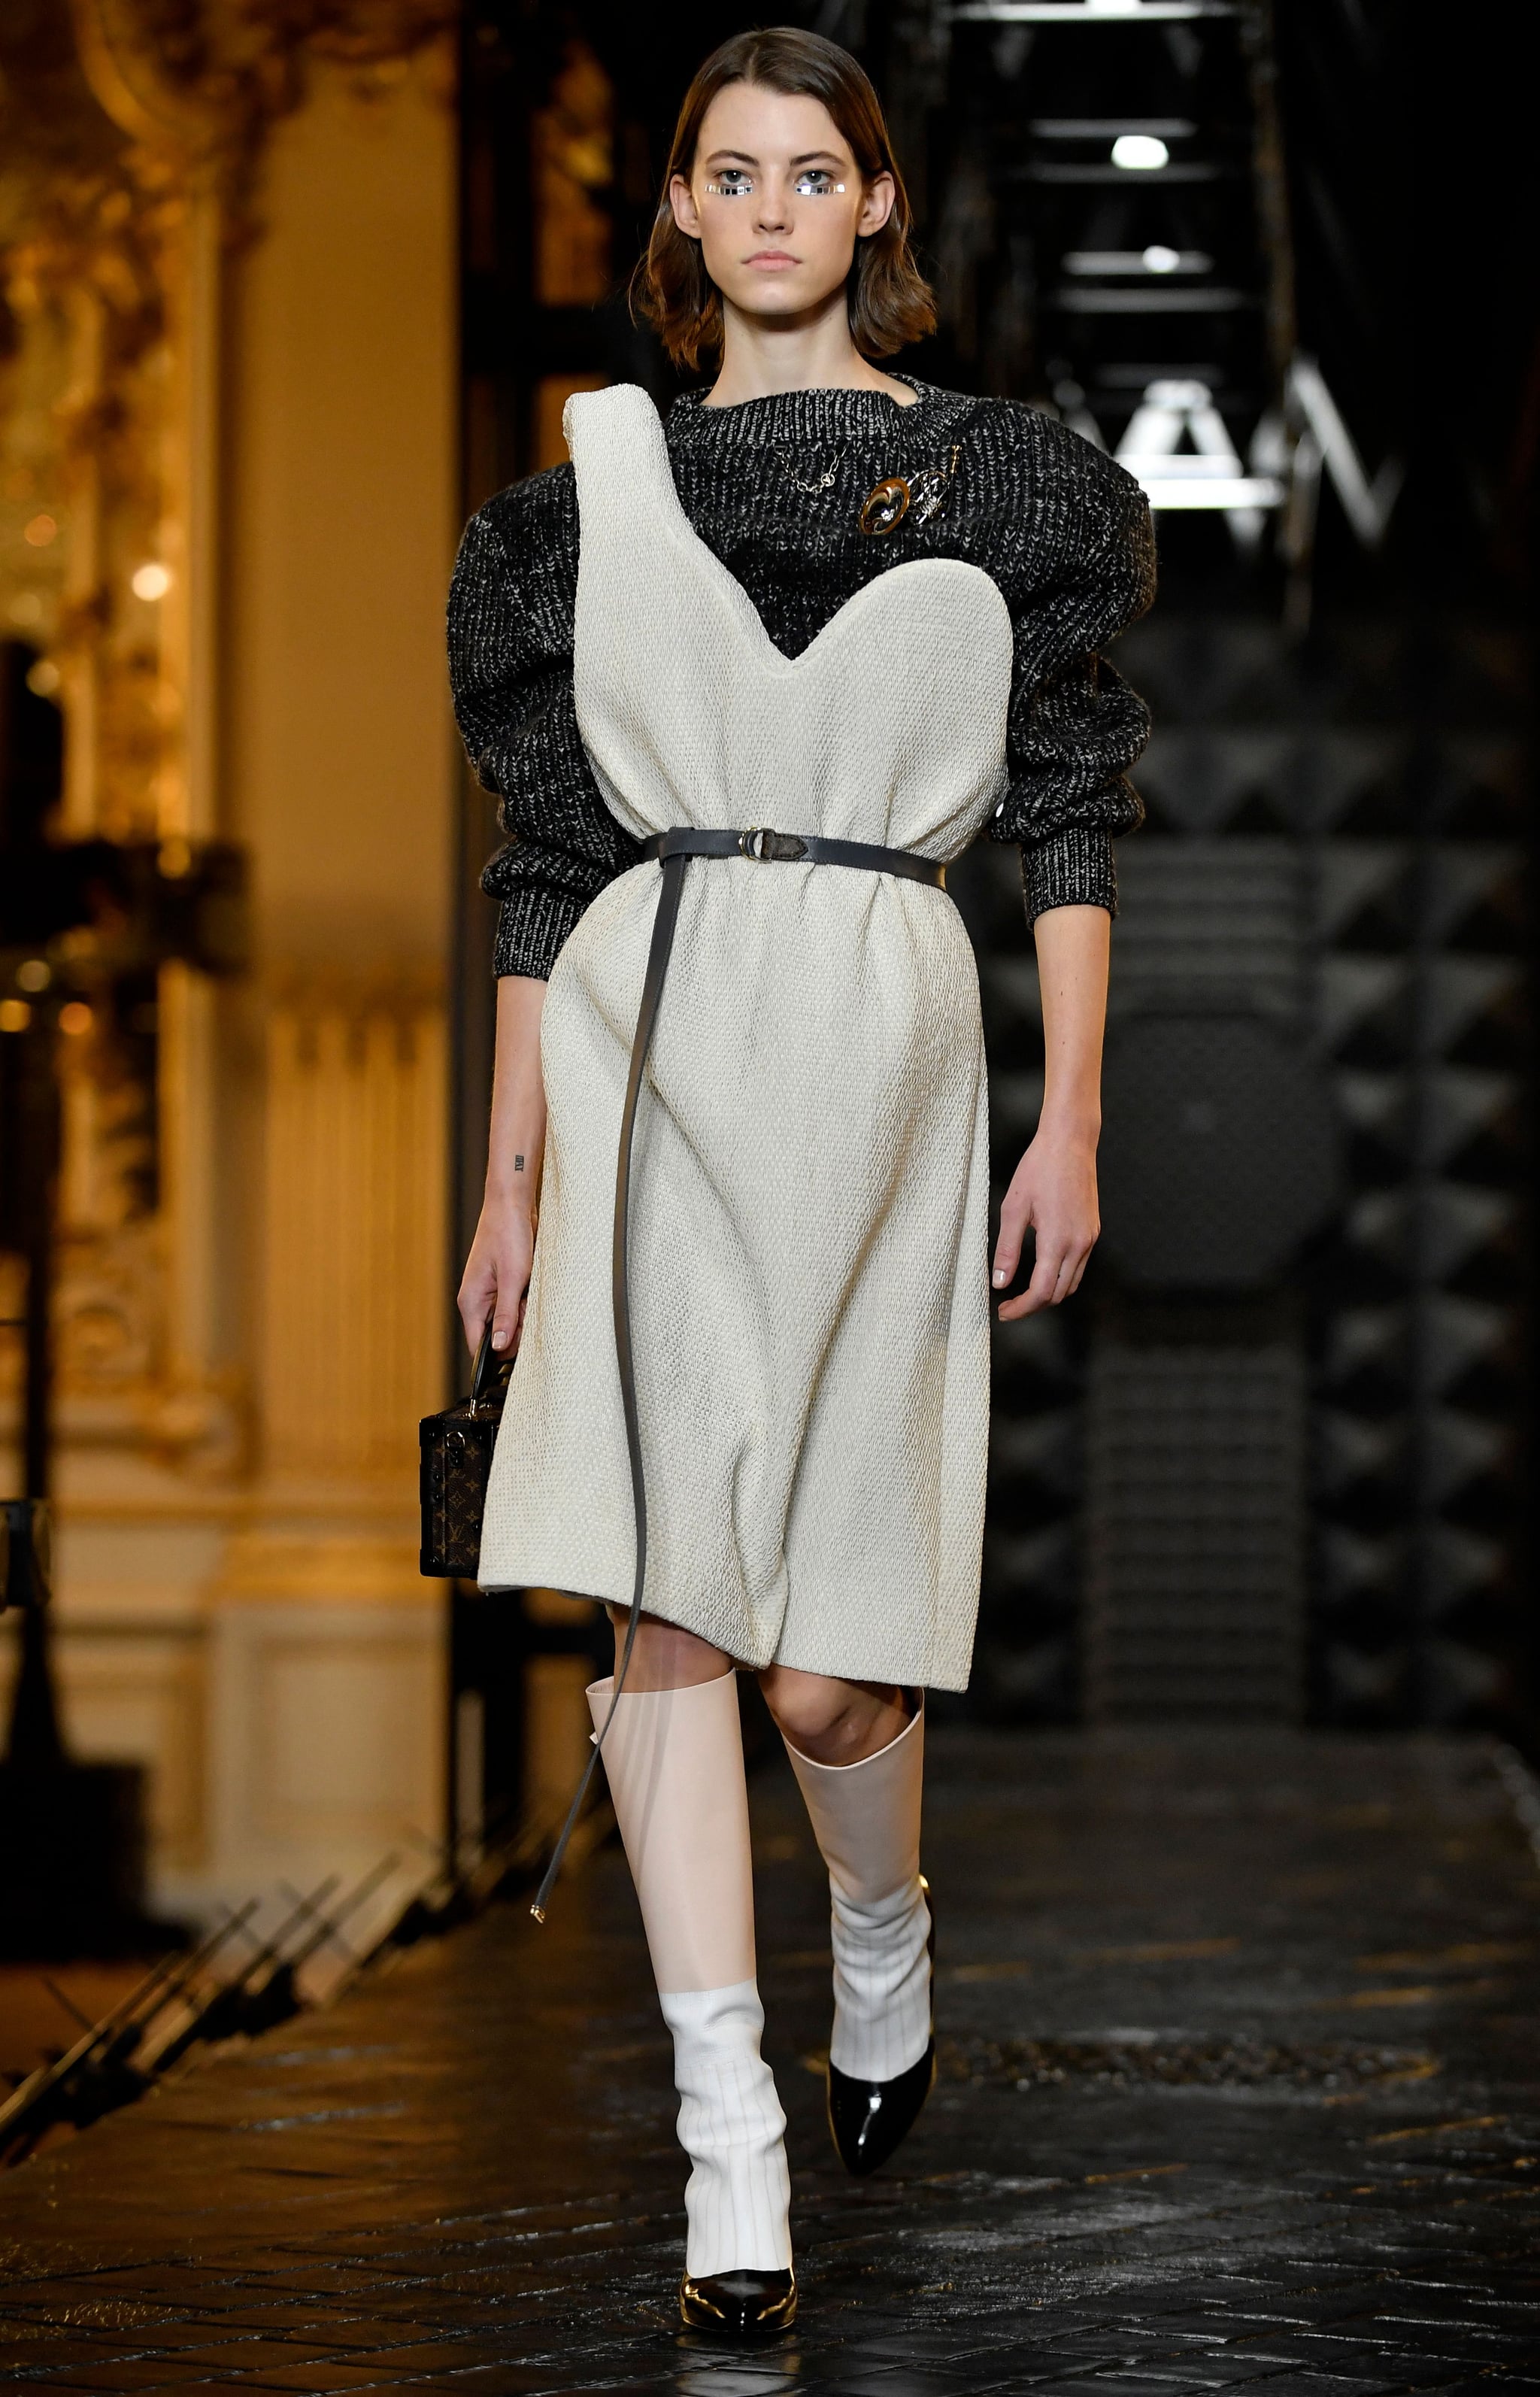 Zendaya Takes Hit From Umbrella At Louis Vuitton Fashion Show